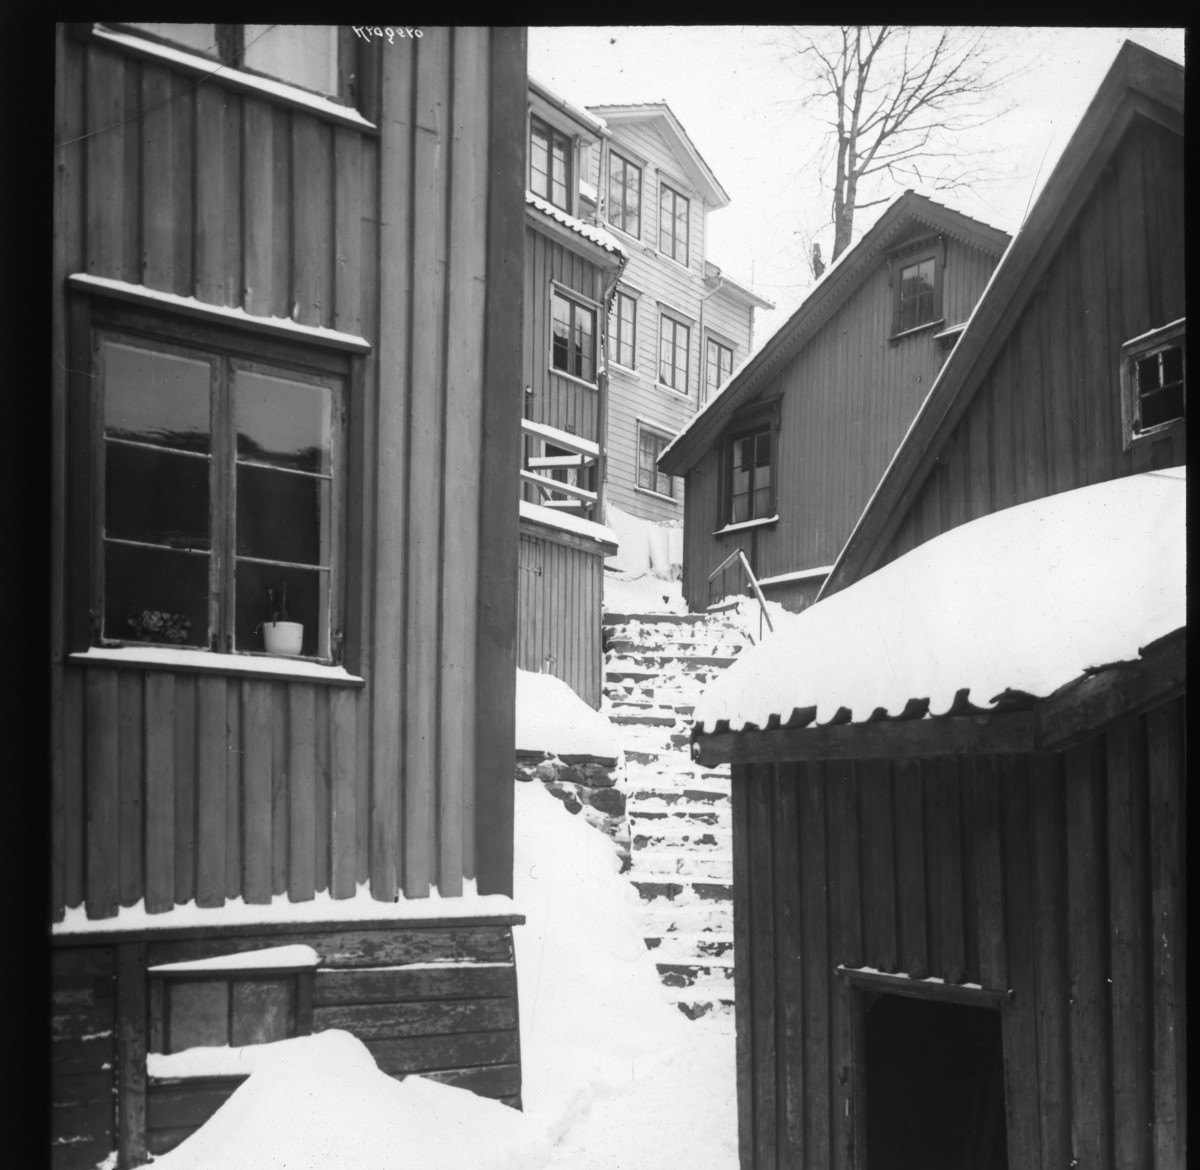 Hus og trapper i snø - Martinis trapper fra 1890 årene. Kragerø